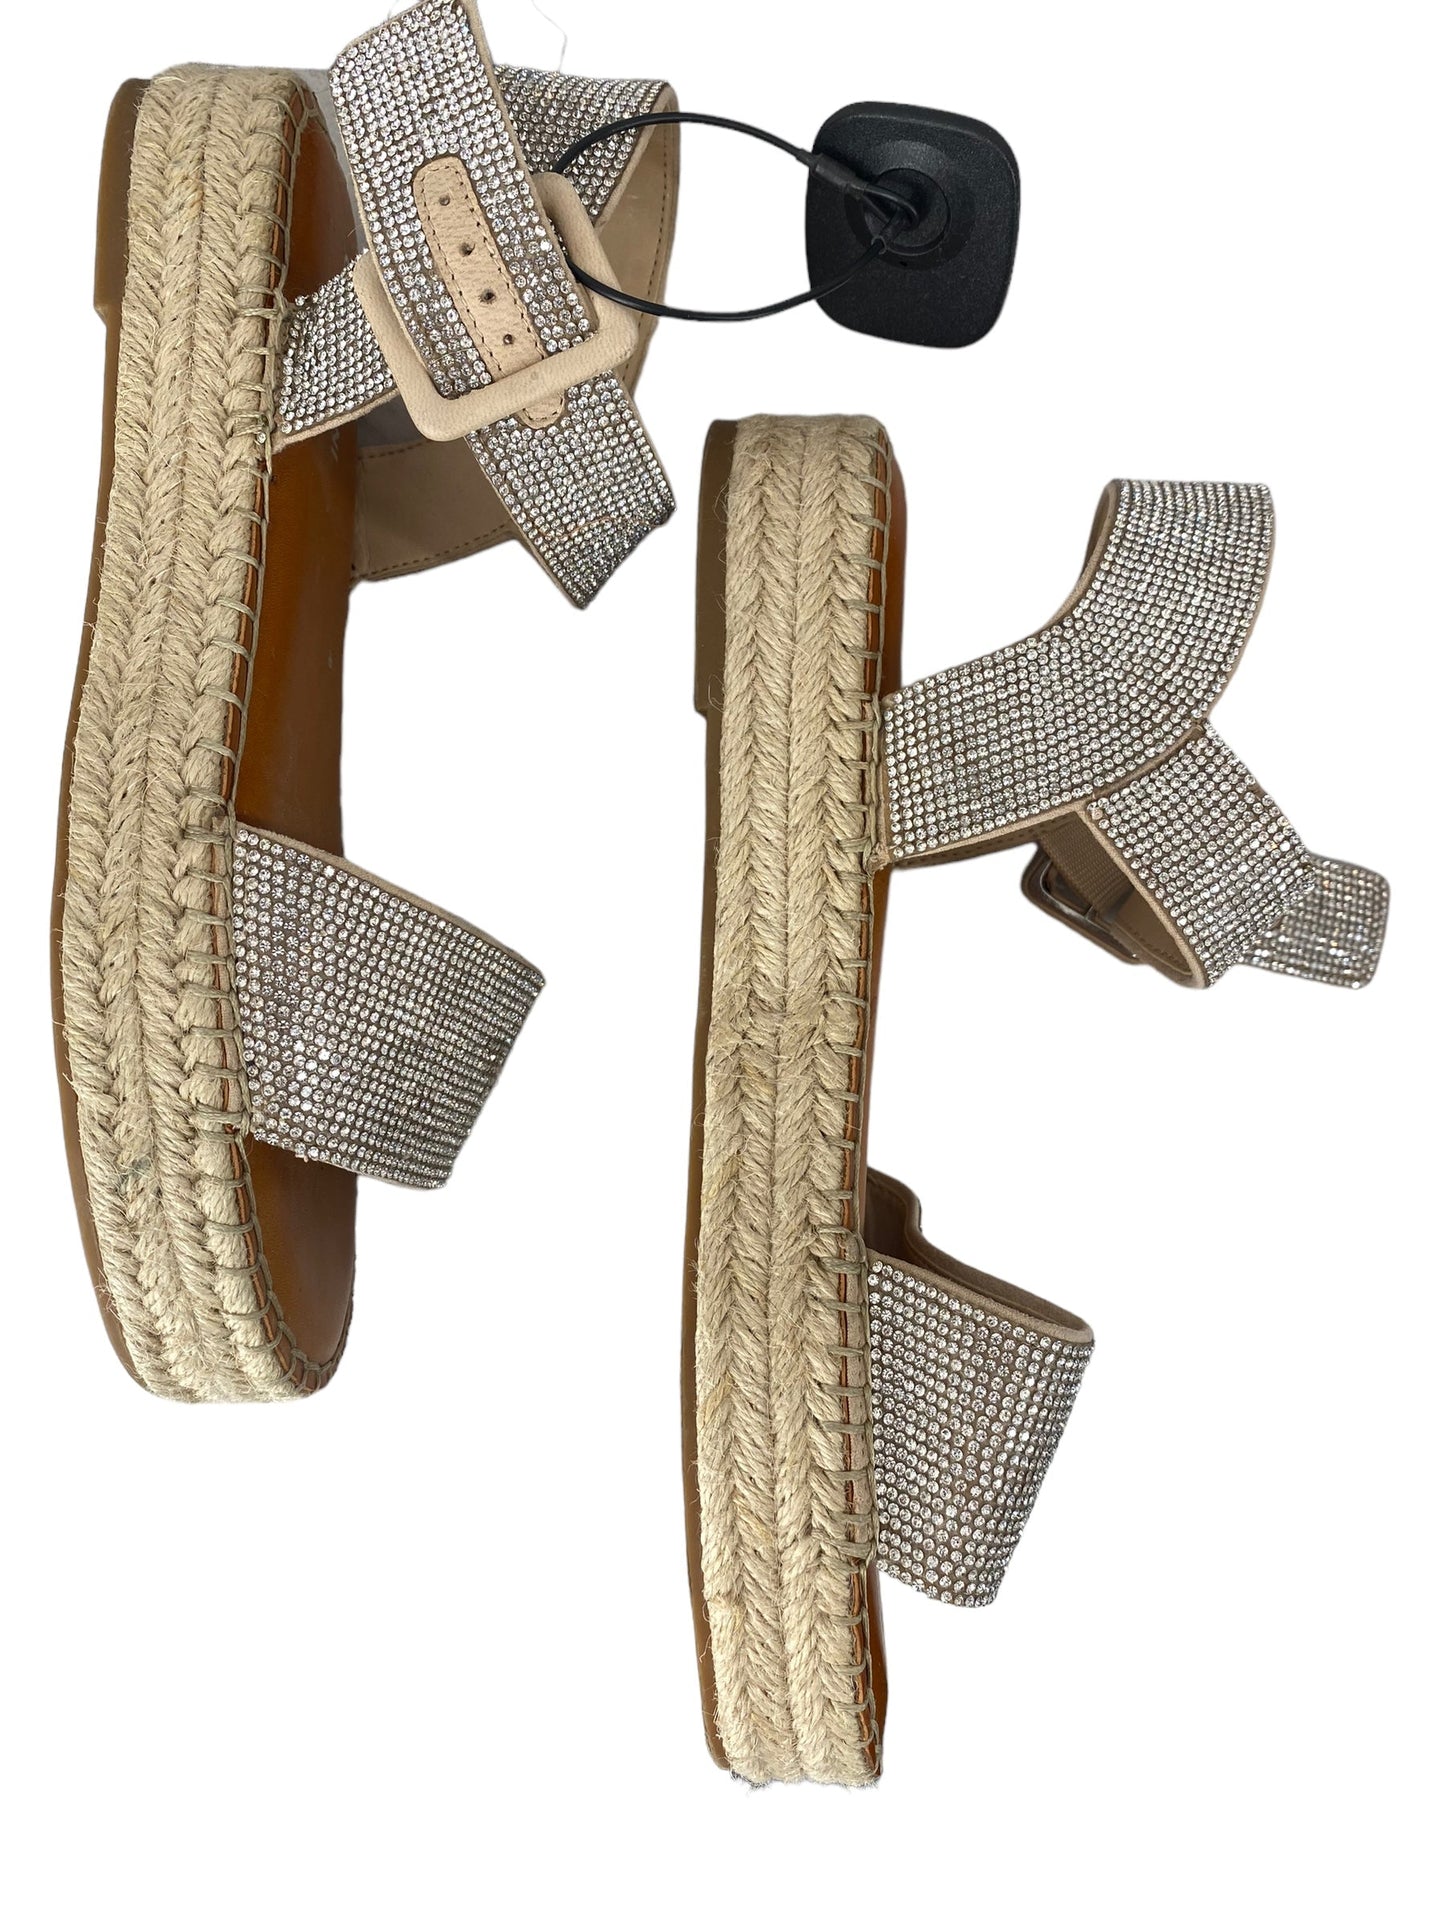 Sandals Heels Platform By Gianni Bini  Size: 9